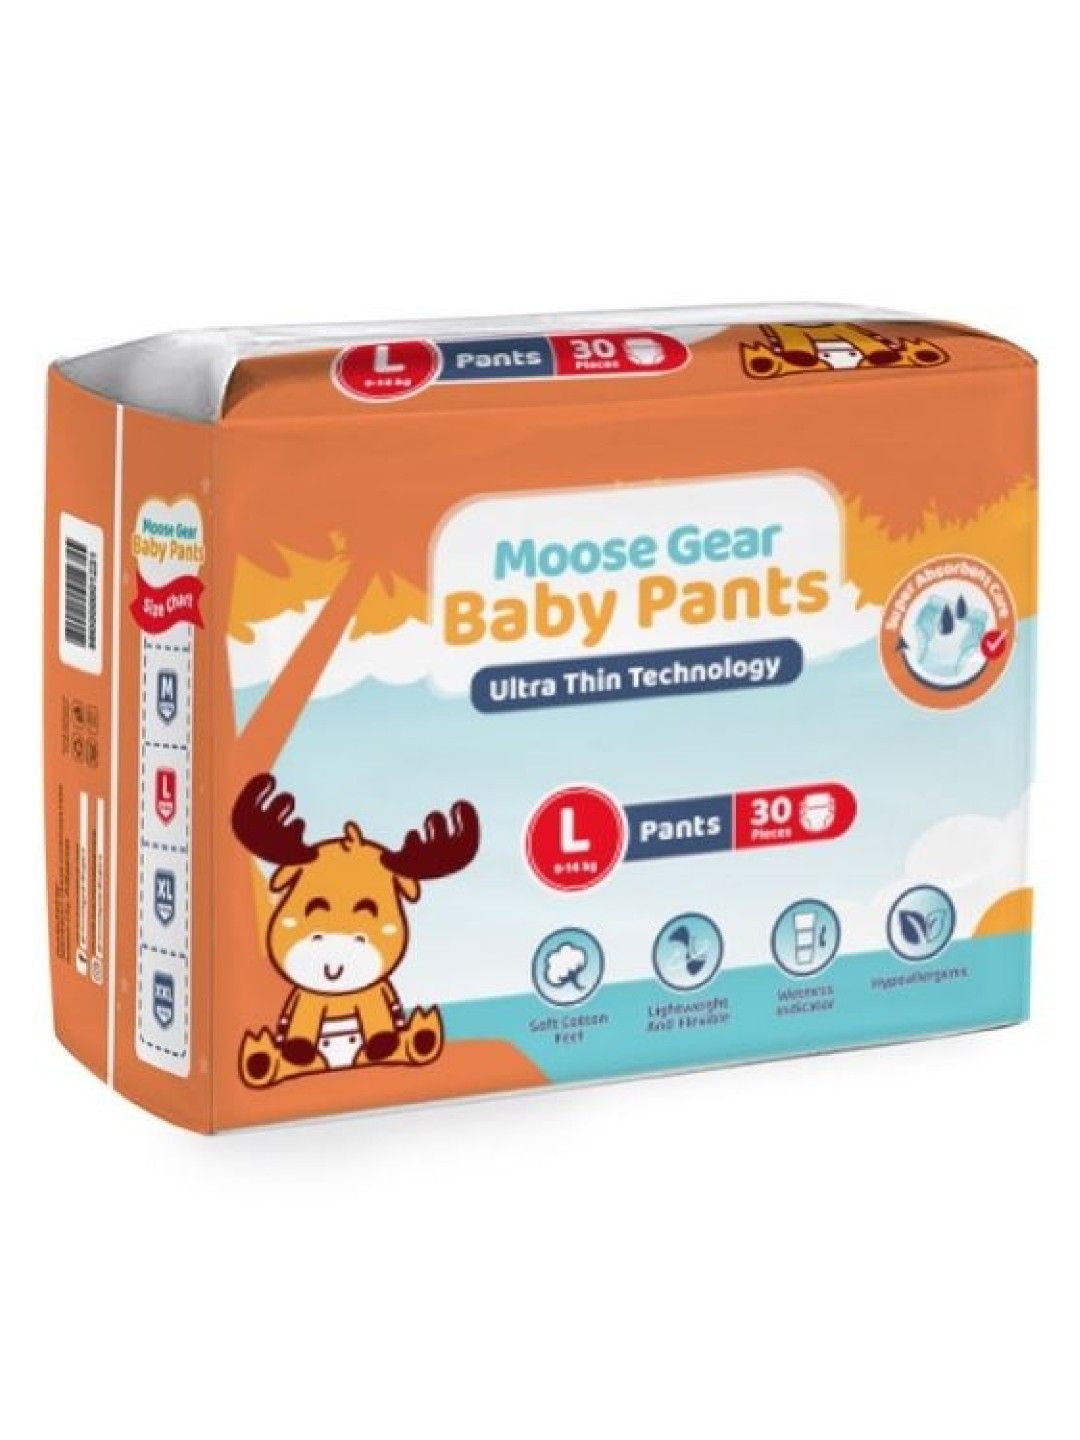 Moose Gear Baby Pants Diapers Large (30 pcs)